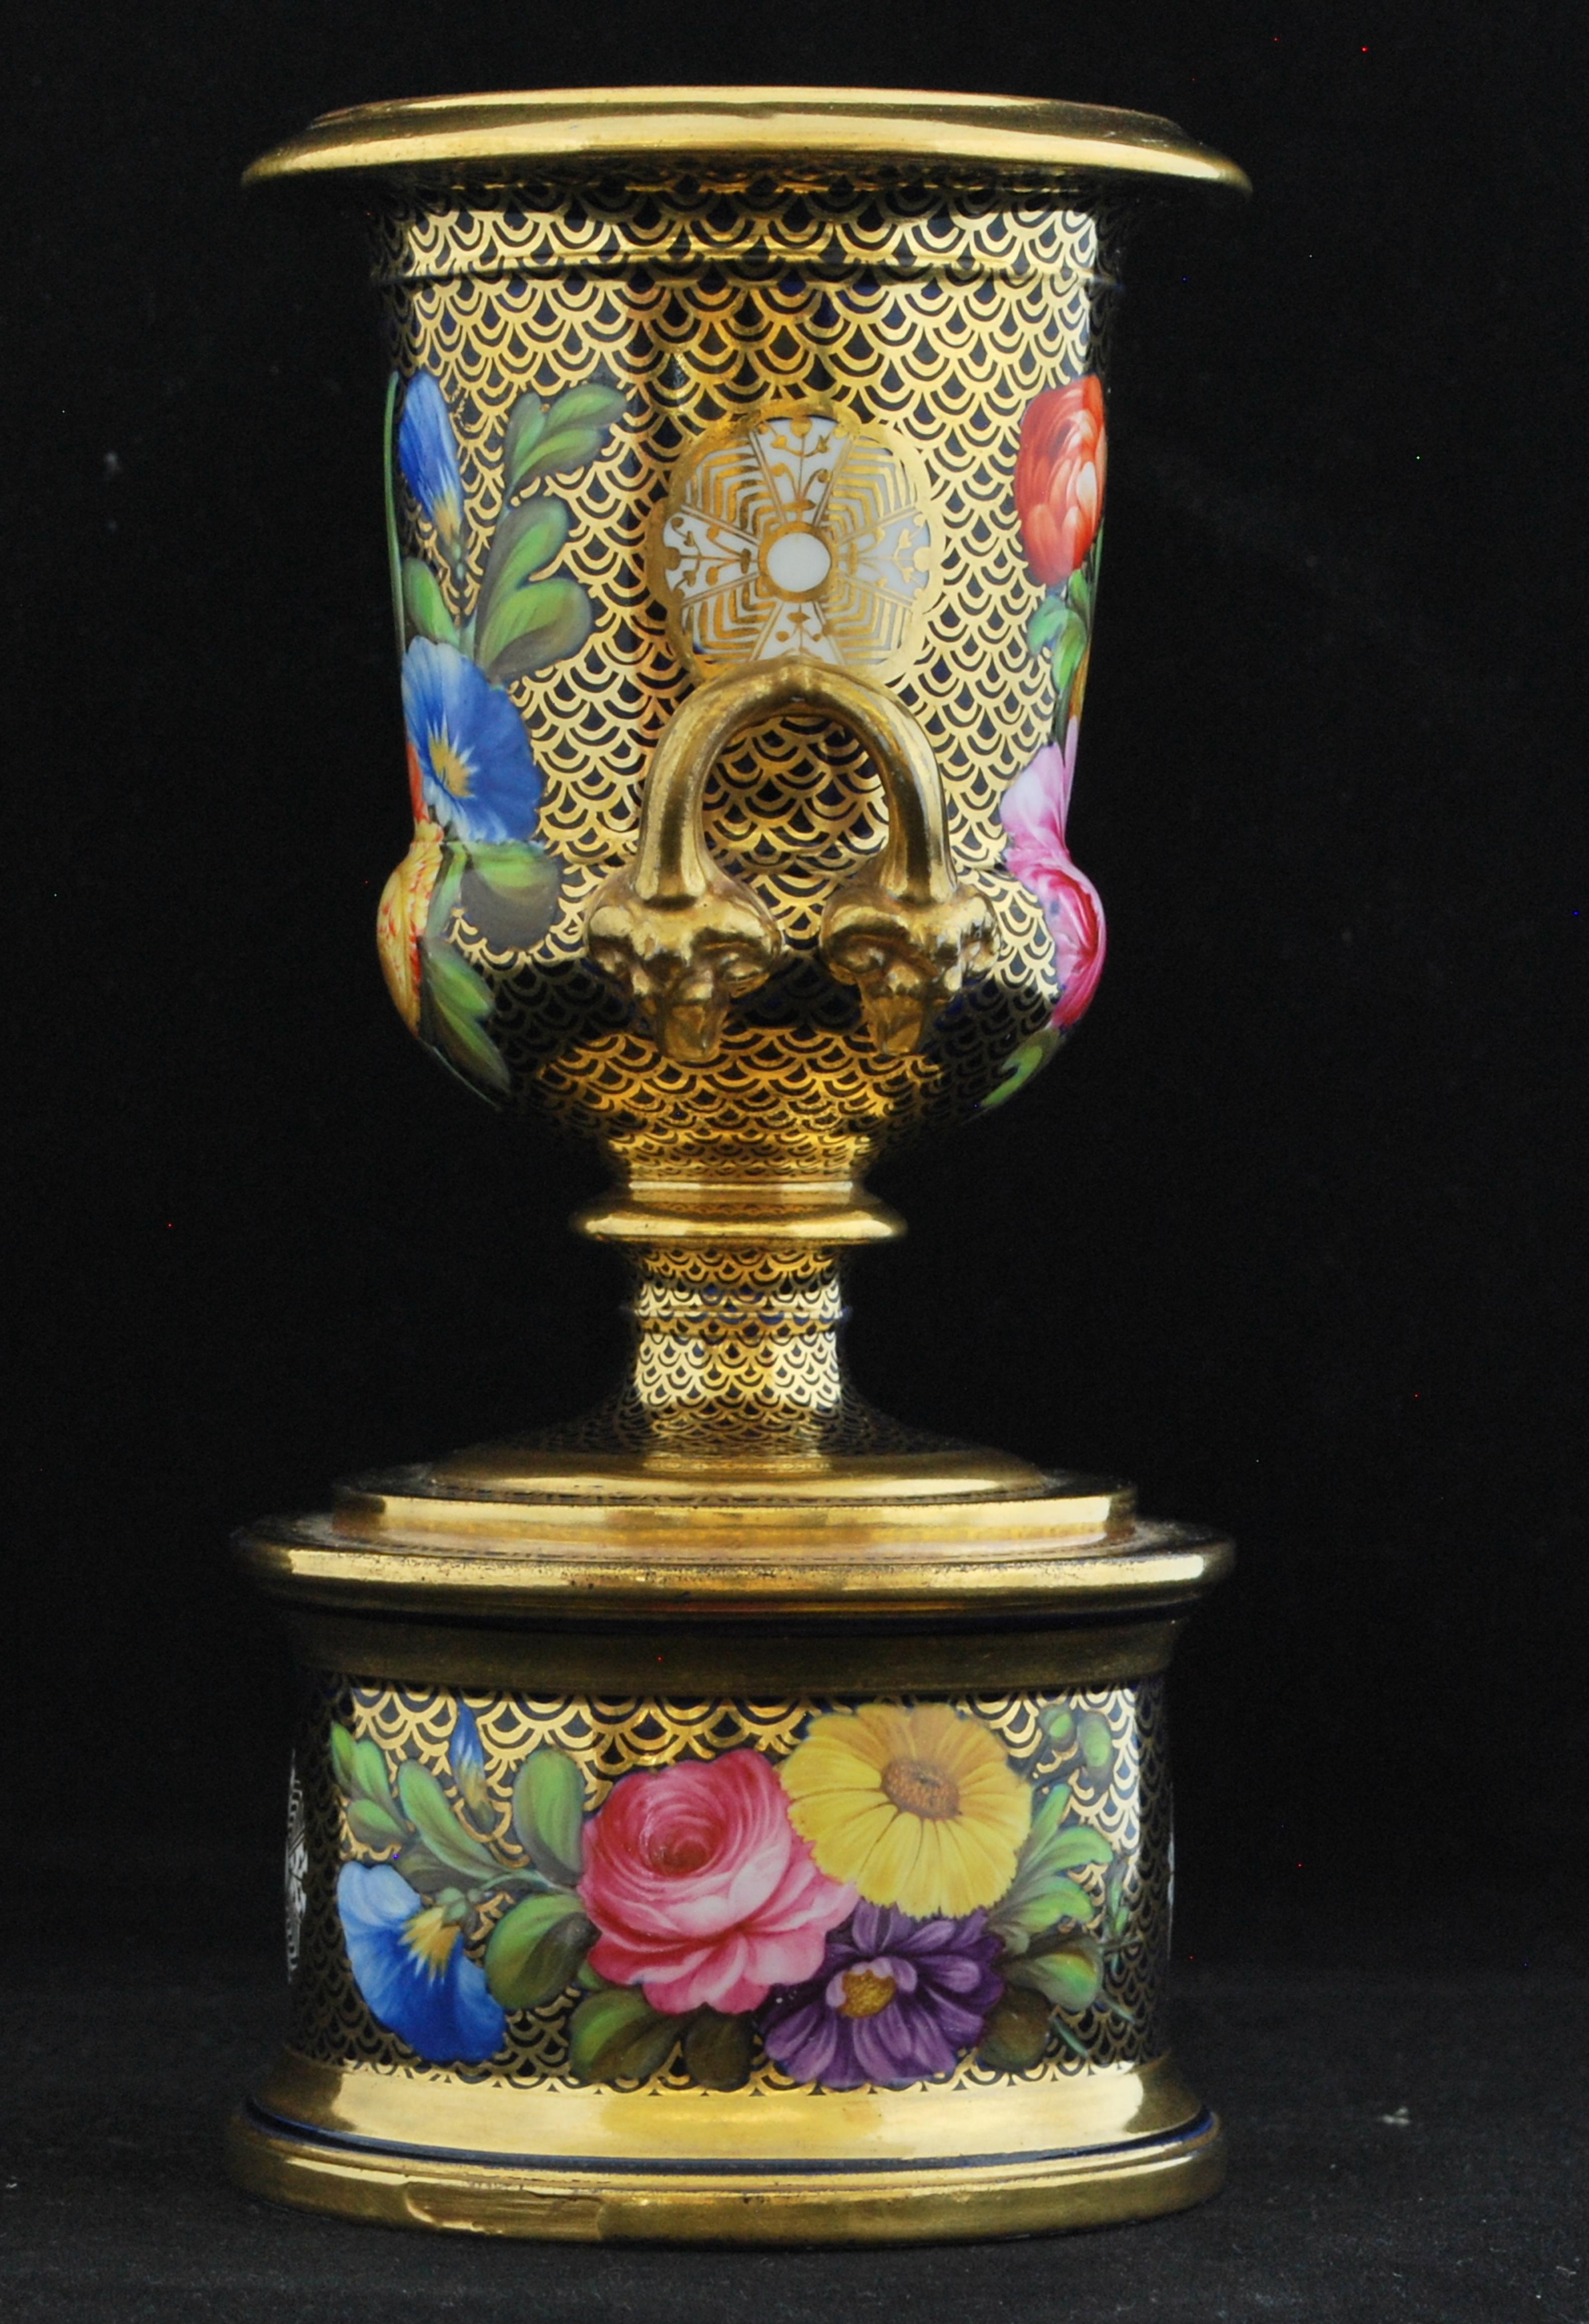 Campana-Vase mit Muster 1166. Spode, um 1820 (Regency) im Angebot